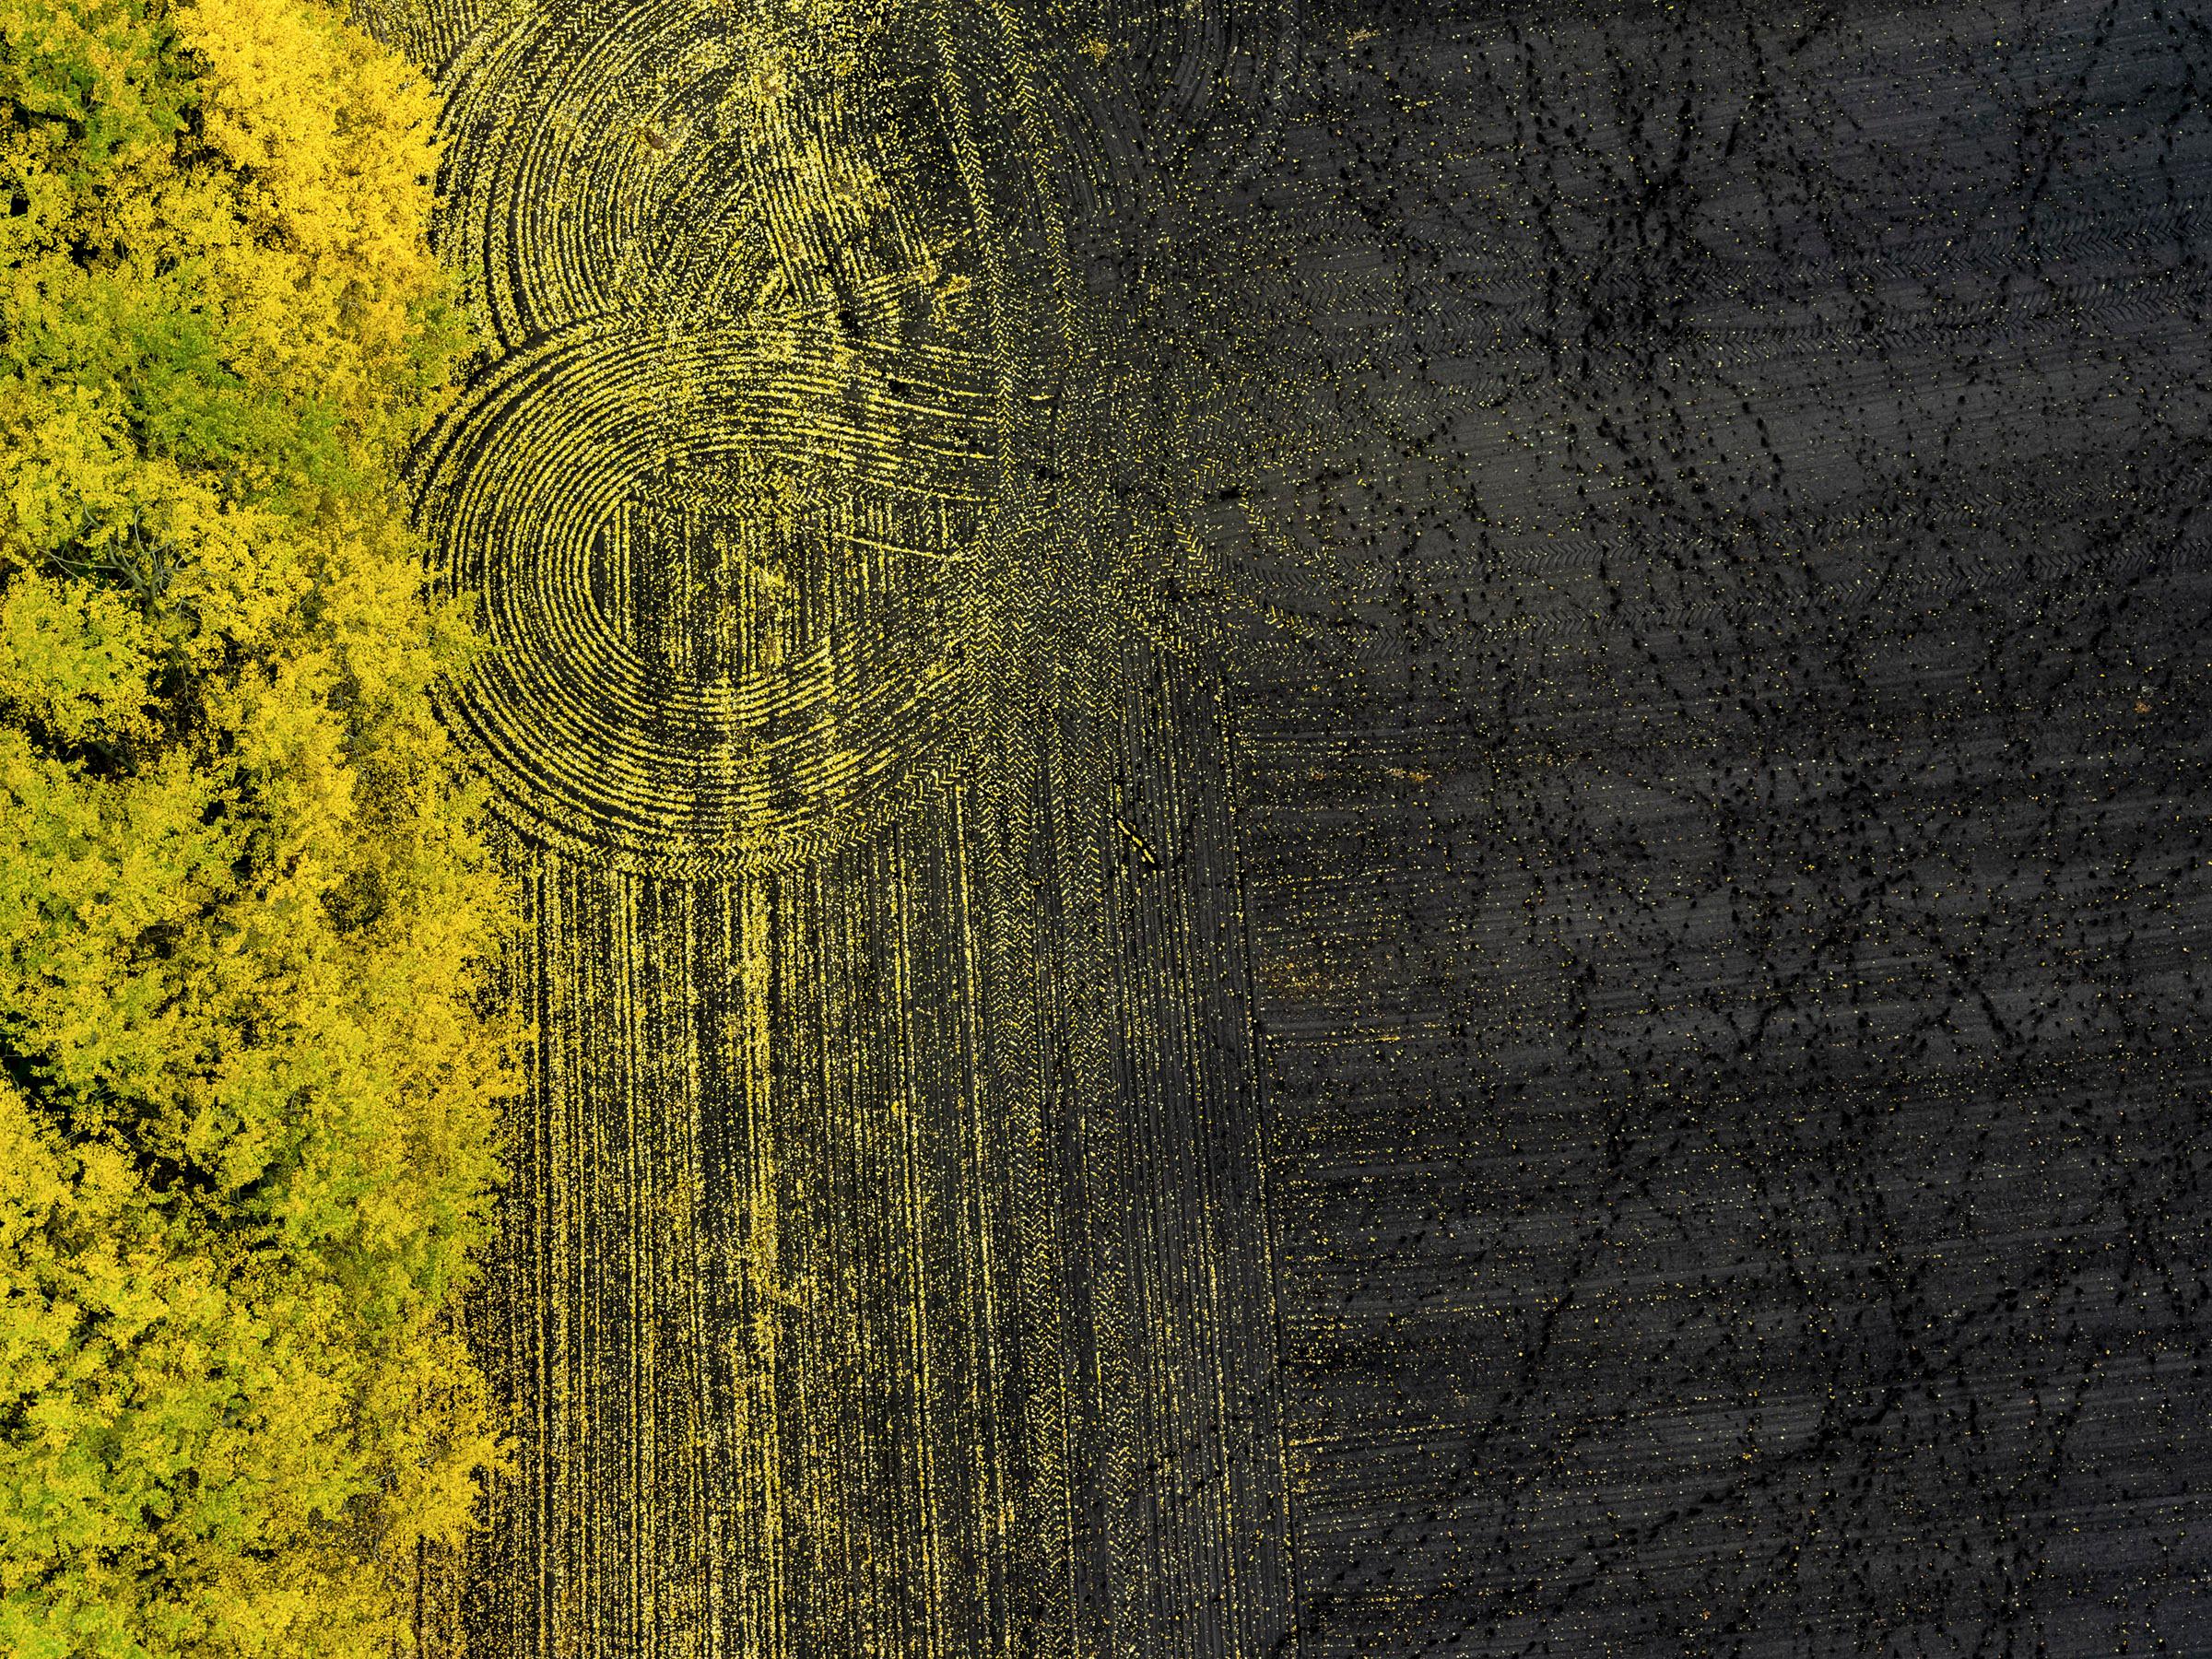 Kacper Kowalski Abstract Photograph - Autumn #70, abstract aerial landscape photograph